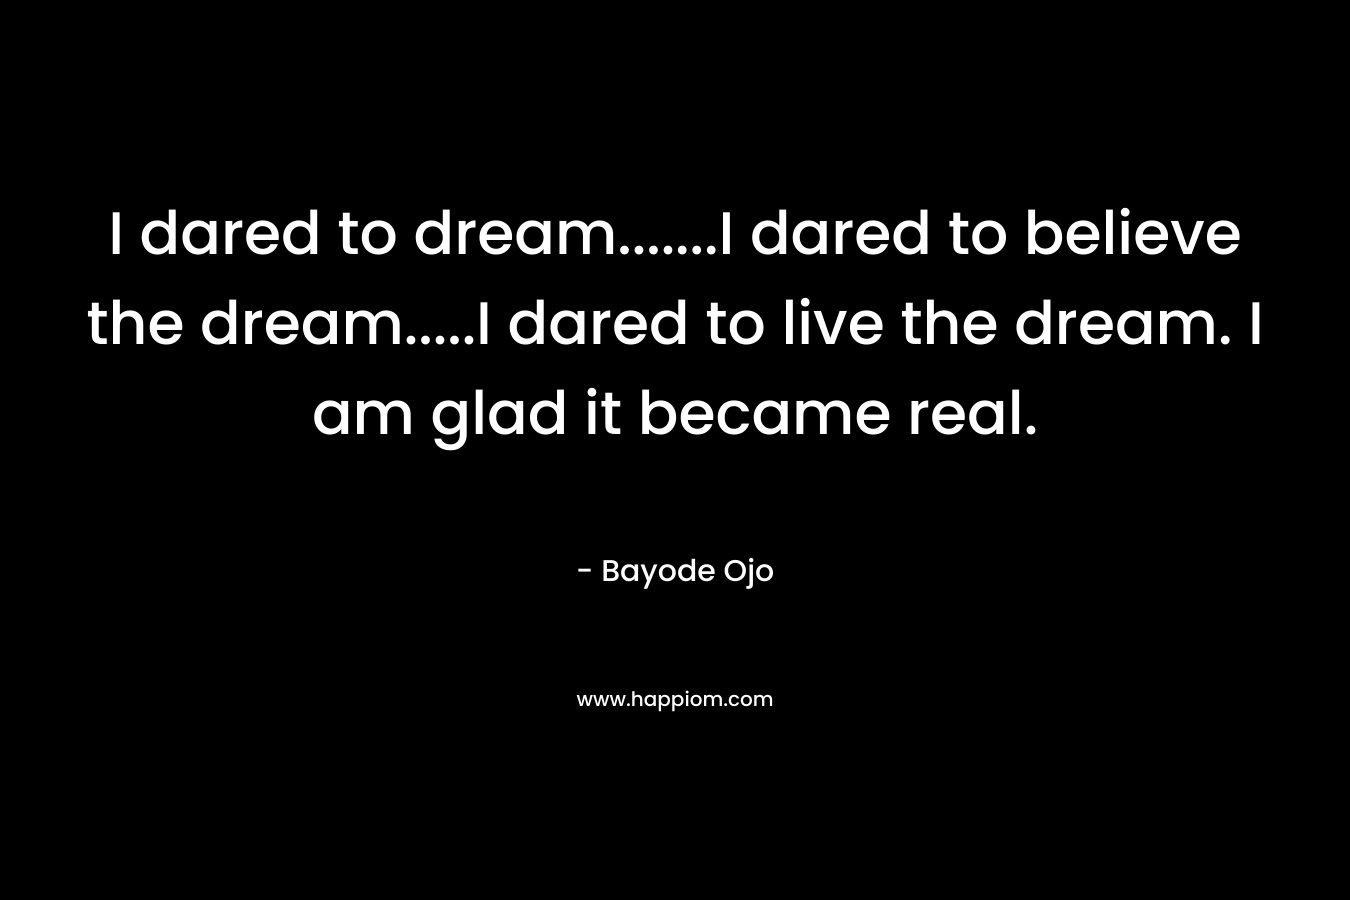 I dared to dream.......I dared to believe the dream.....I dared to live the dream. I am glad it became real.